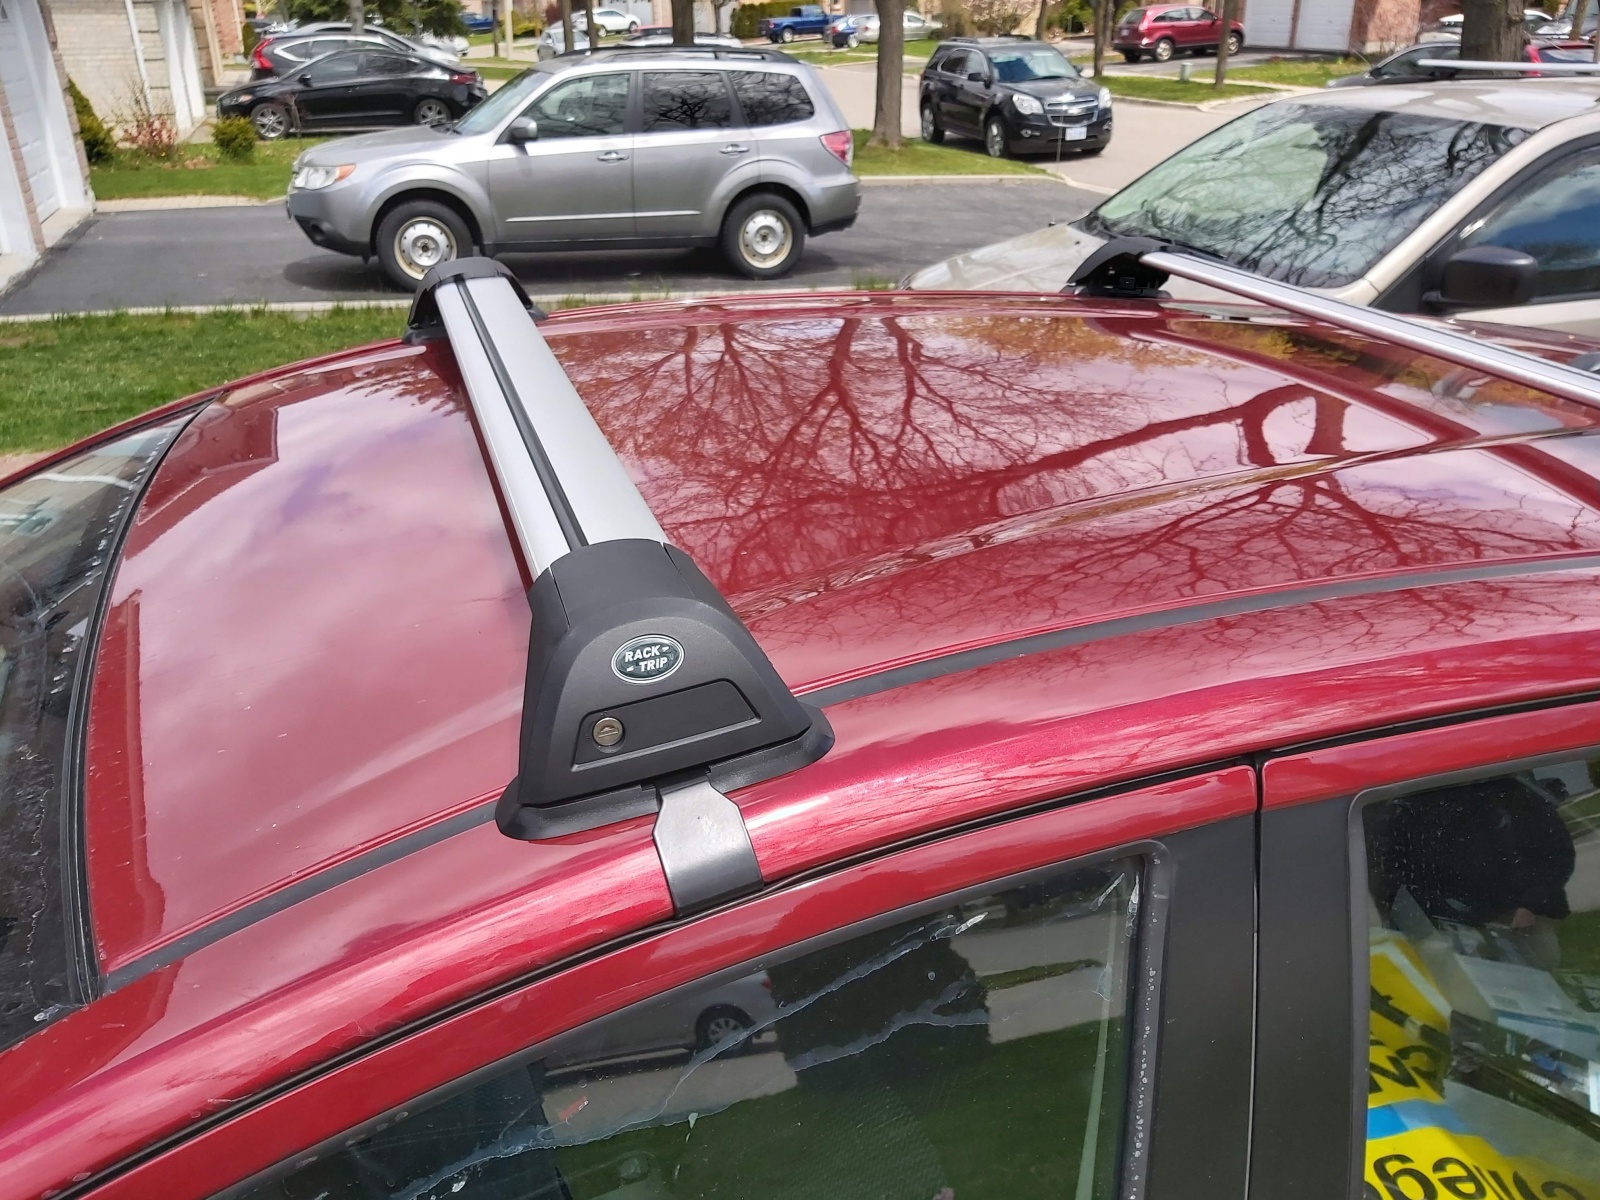 2017 Nissan Versa Note Bare Roof Rack - RackTrip - Canada Car Racks and